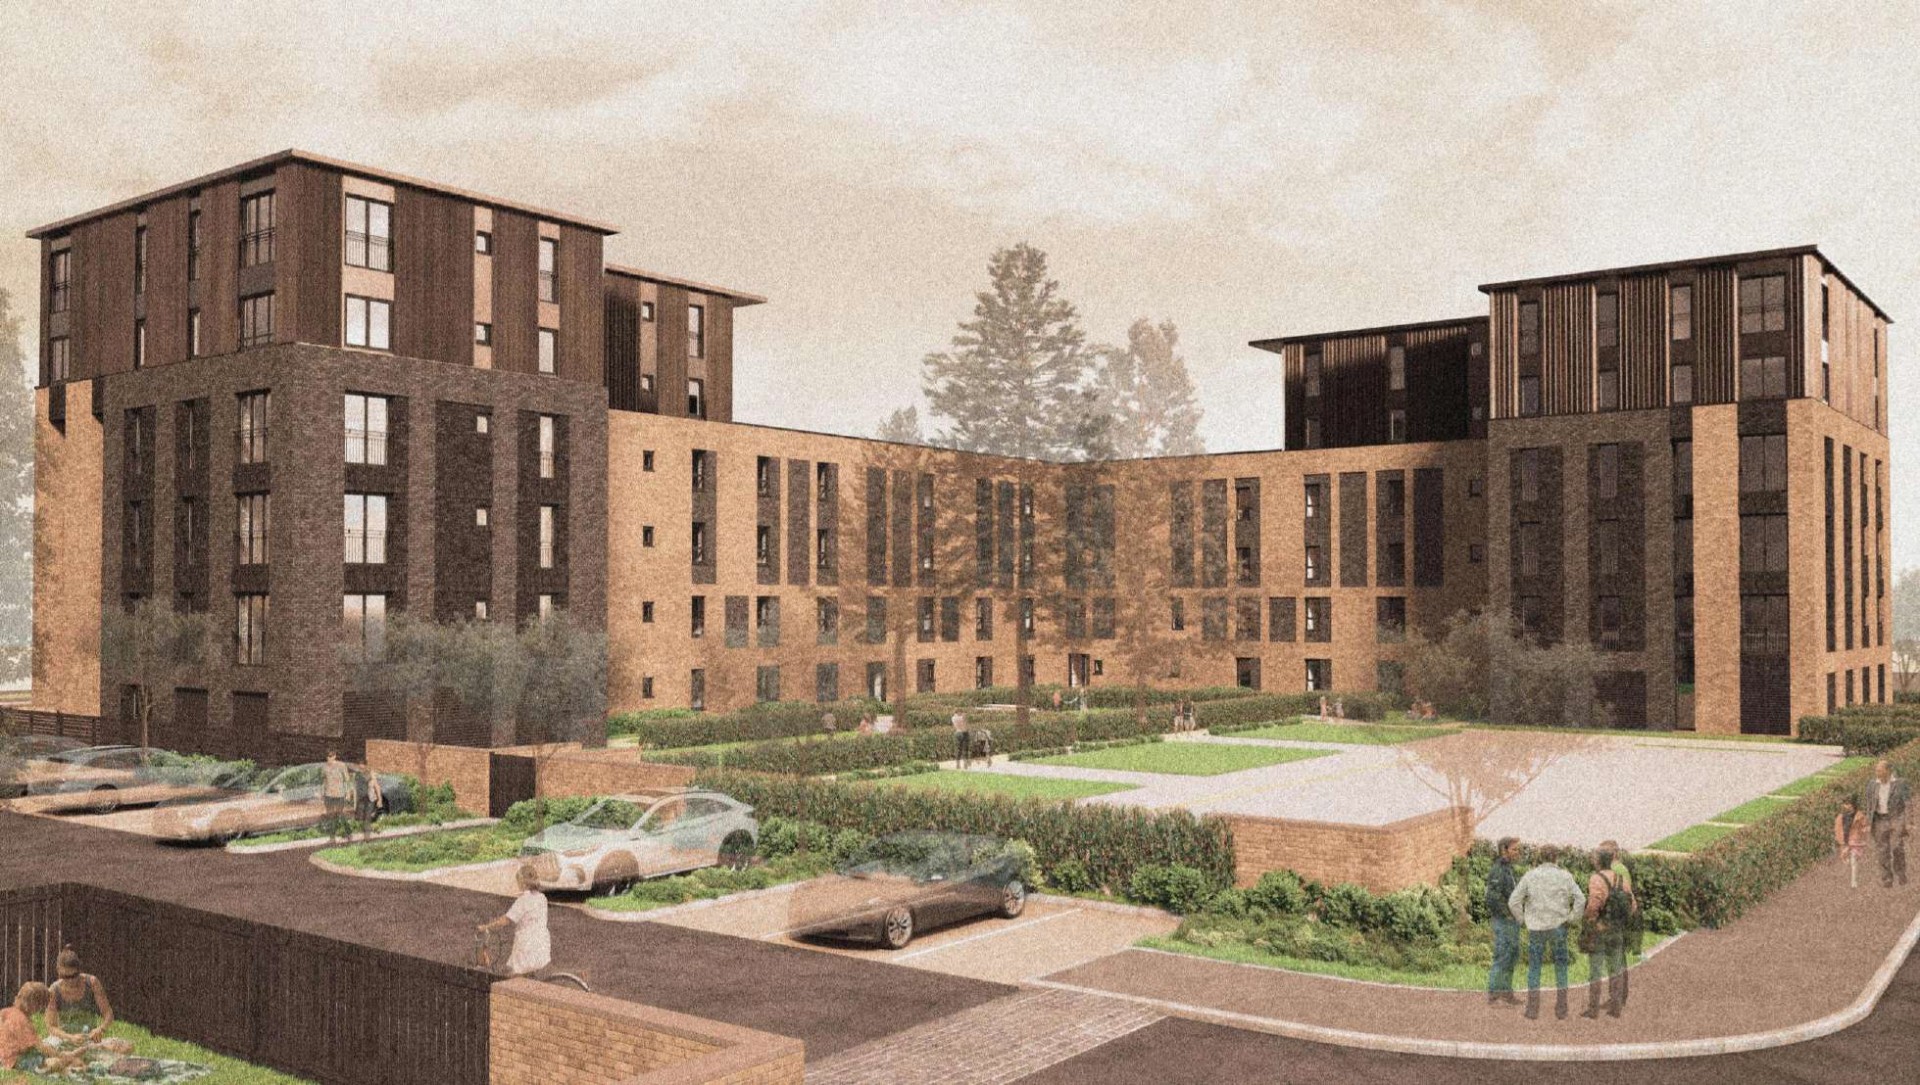 Designs revealed for 173-home Dalmarnock plans